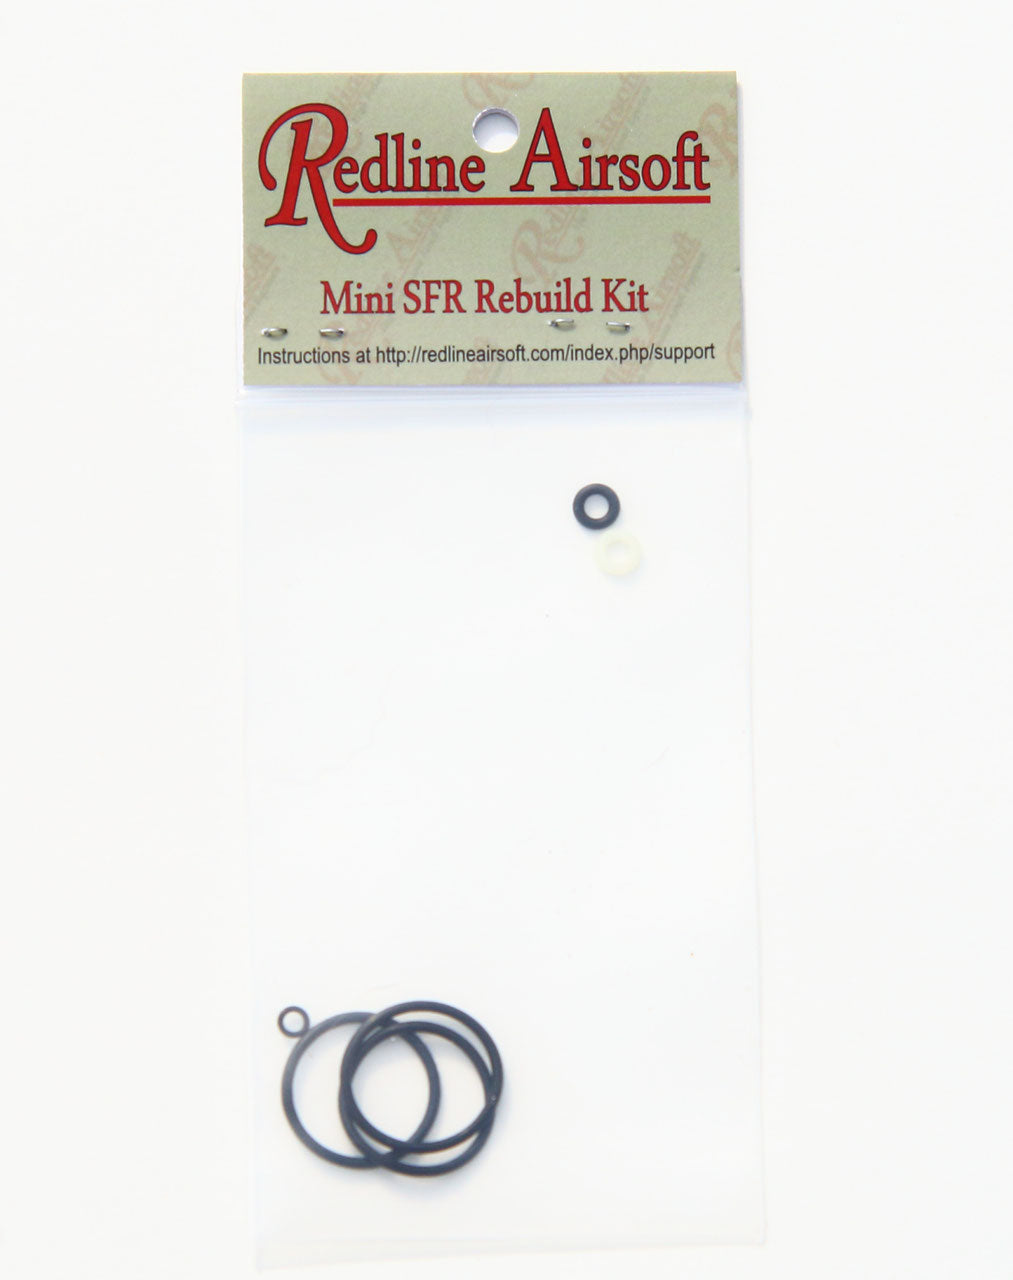 Redline Airsoft Mini SFR Rebuild Kit